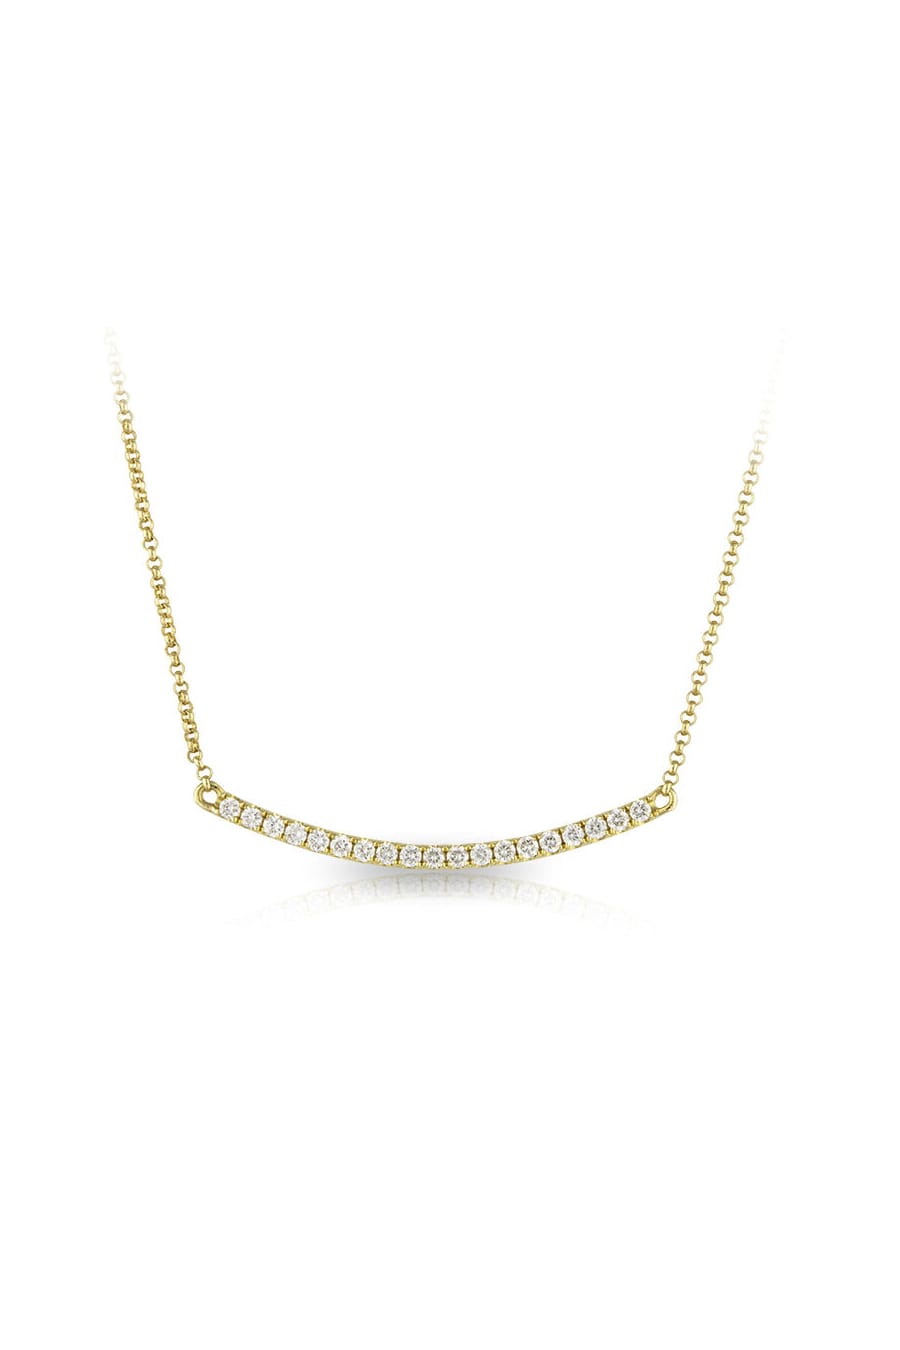 18 Carat Gold Curved Diamond Bar Pendant available at LeGassick Diamonds and Jewellery Gold Coast, Australia.